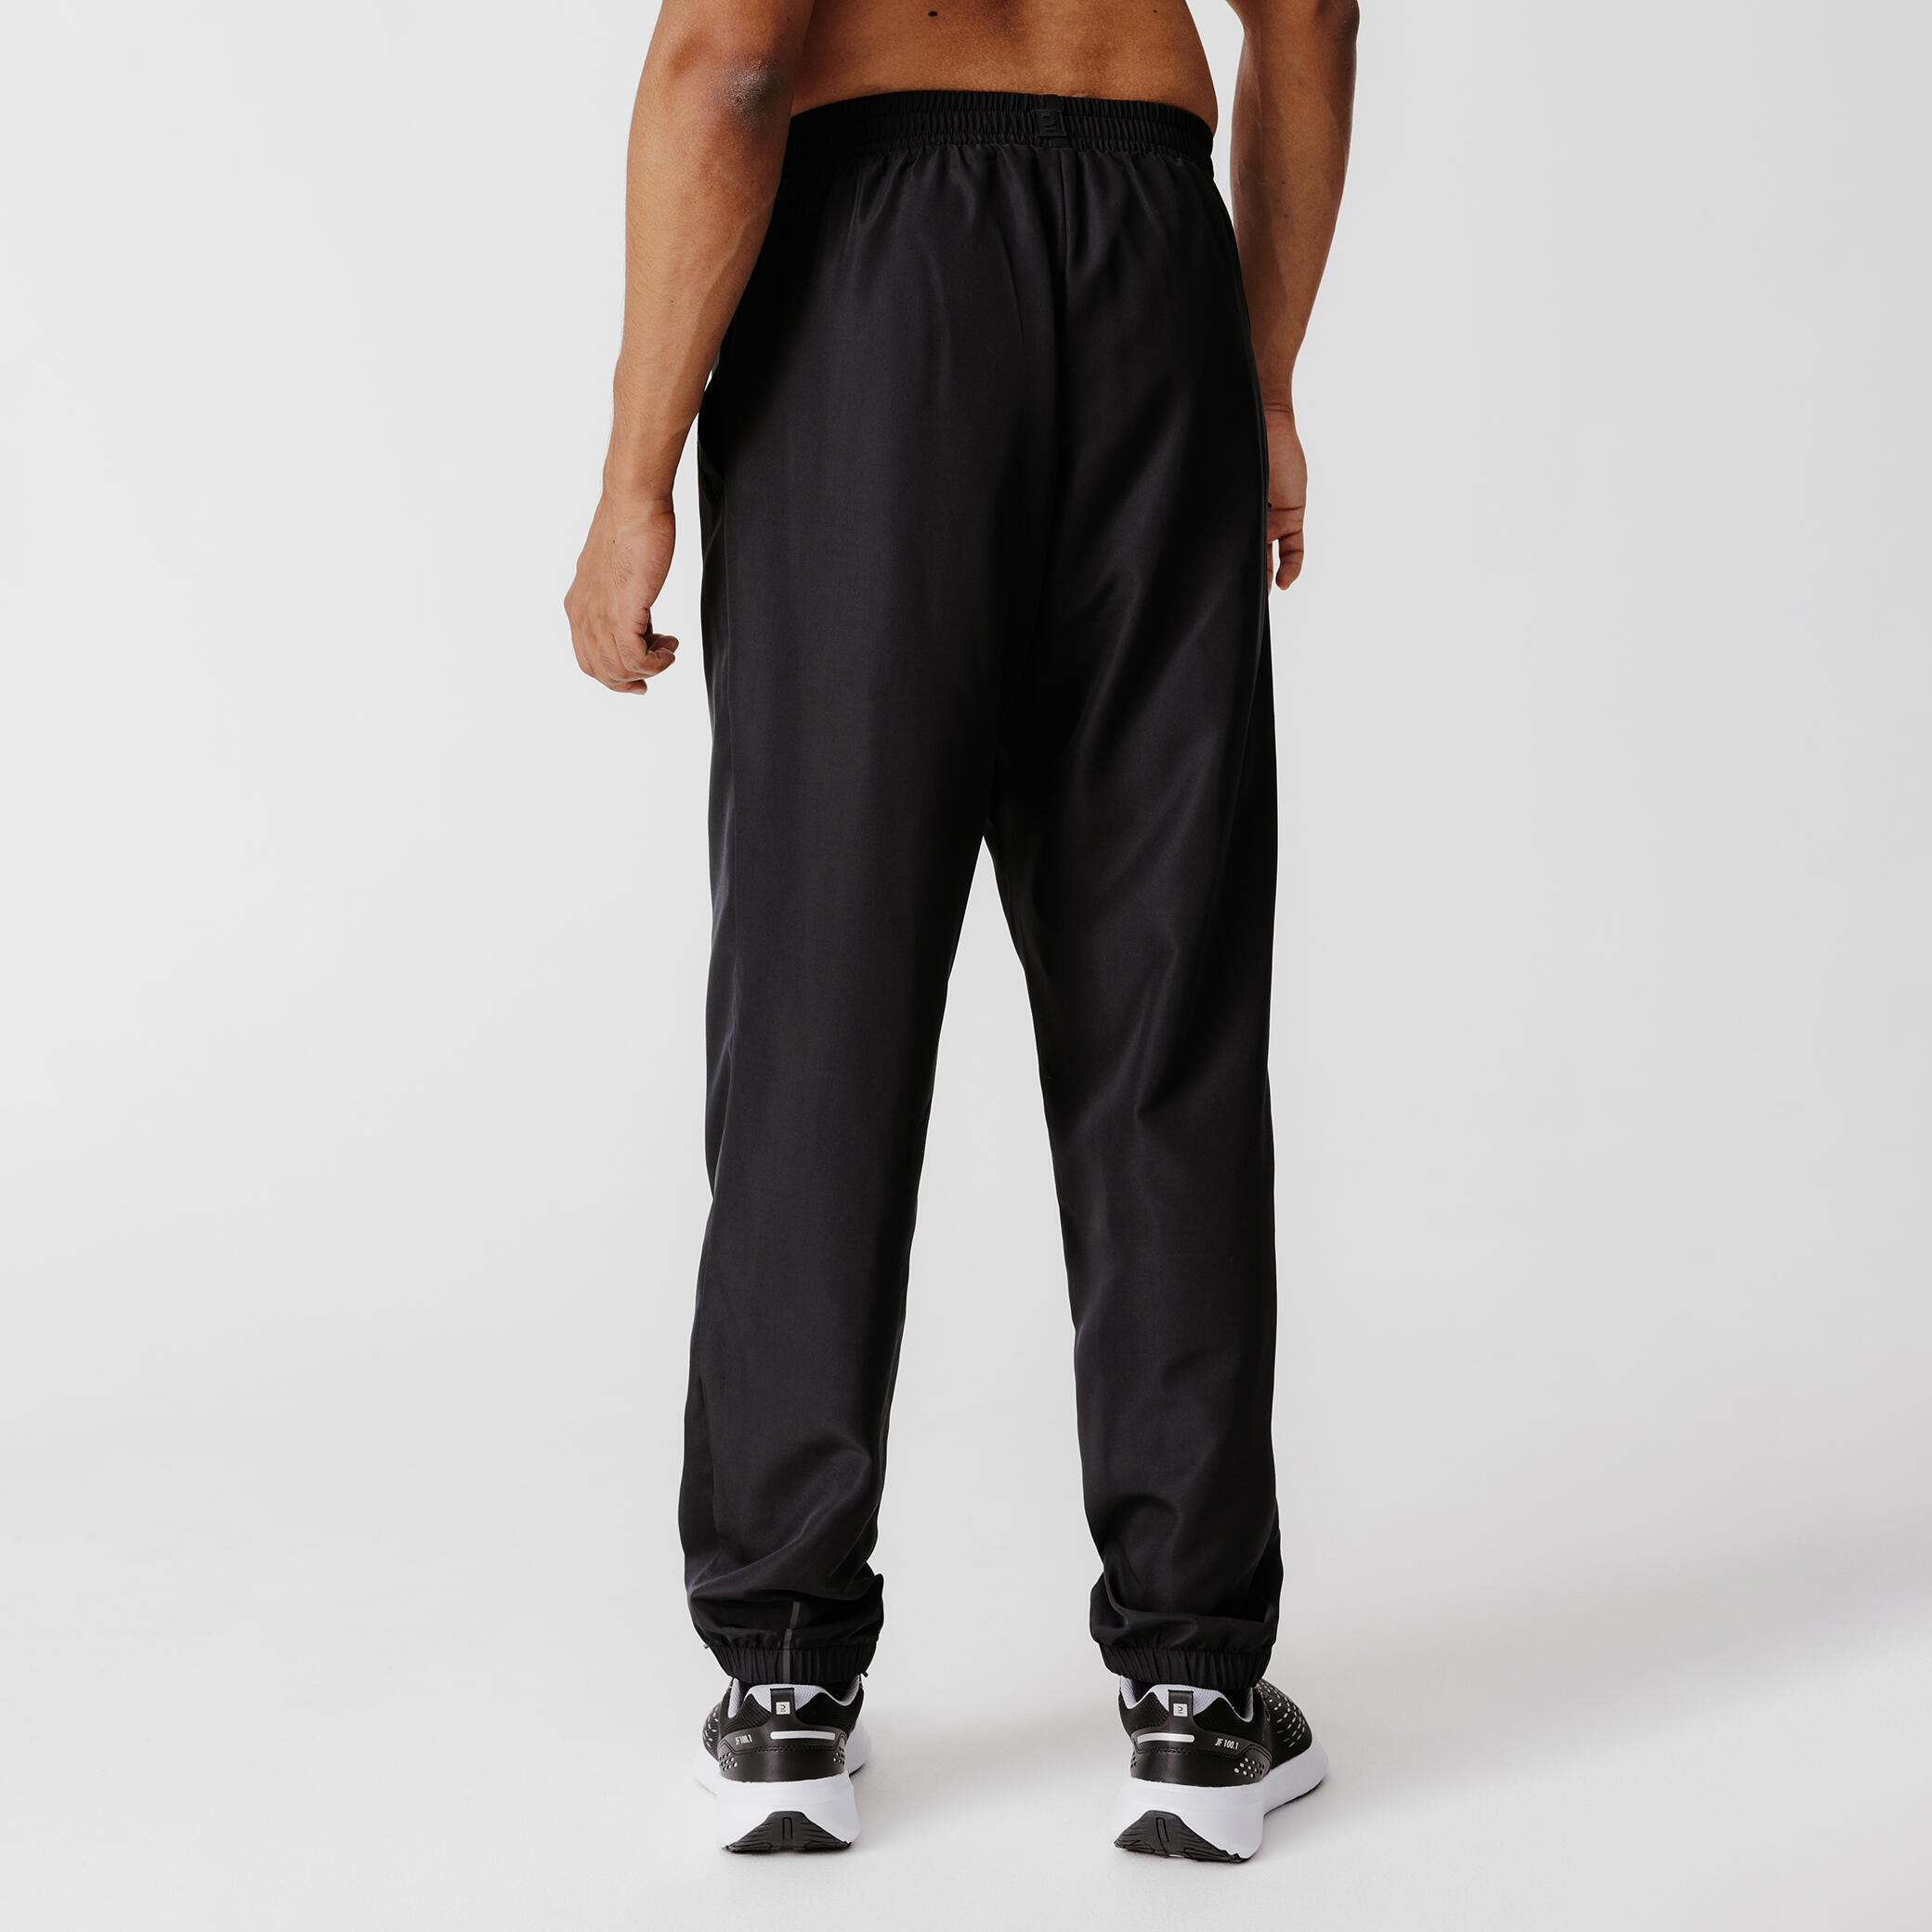 Men's Dry 100 breathable running trousers - black 2/4